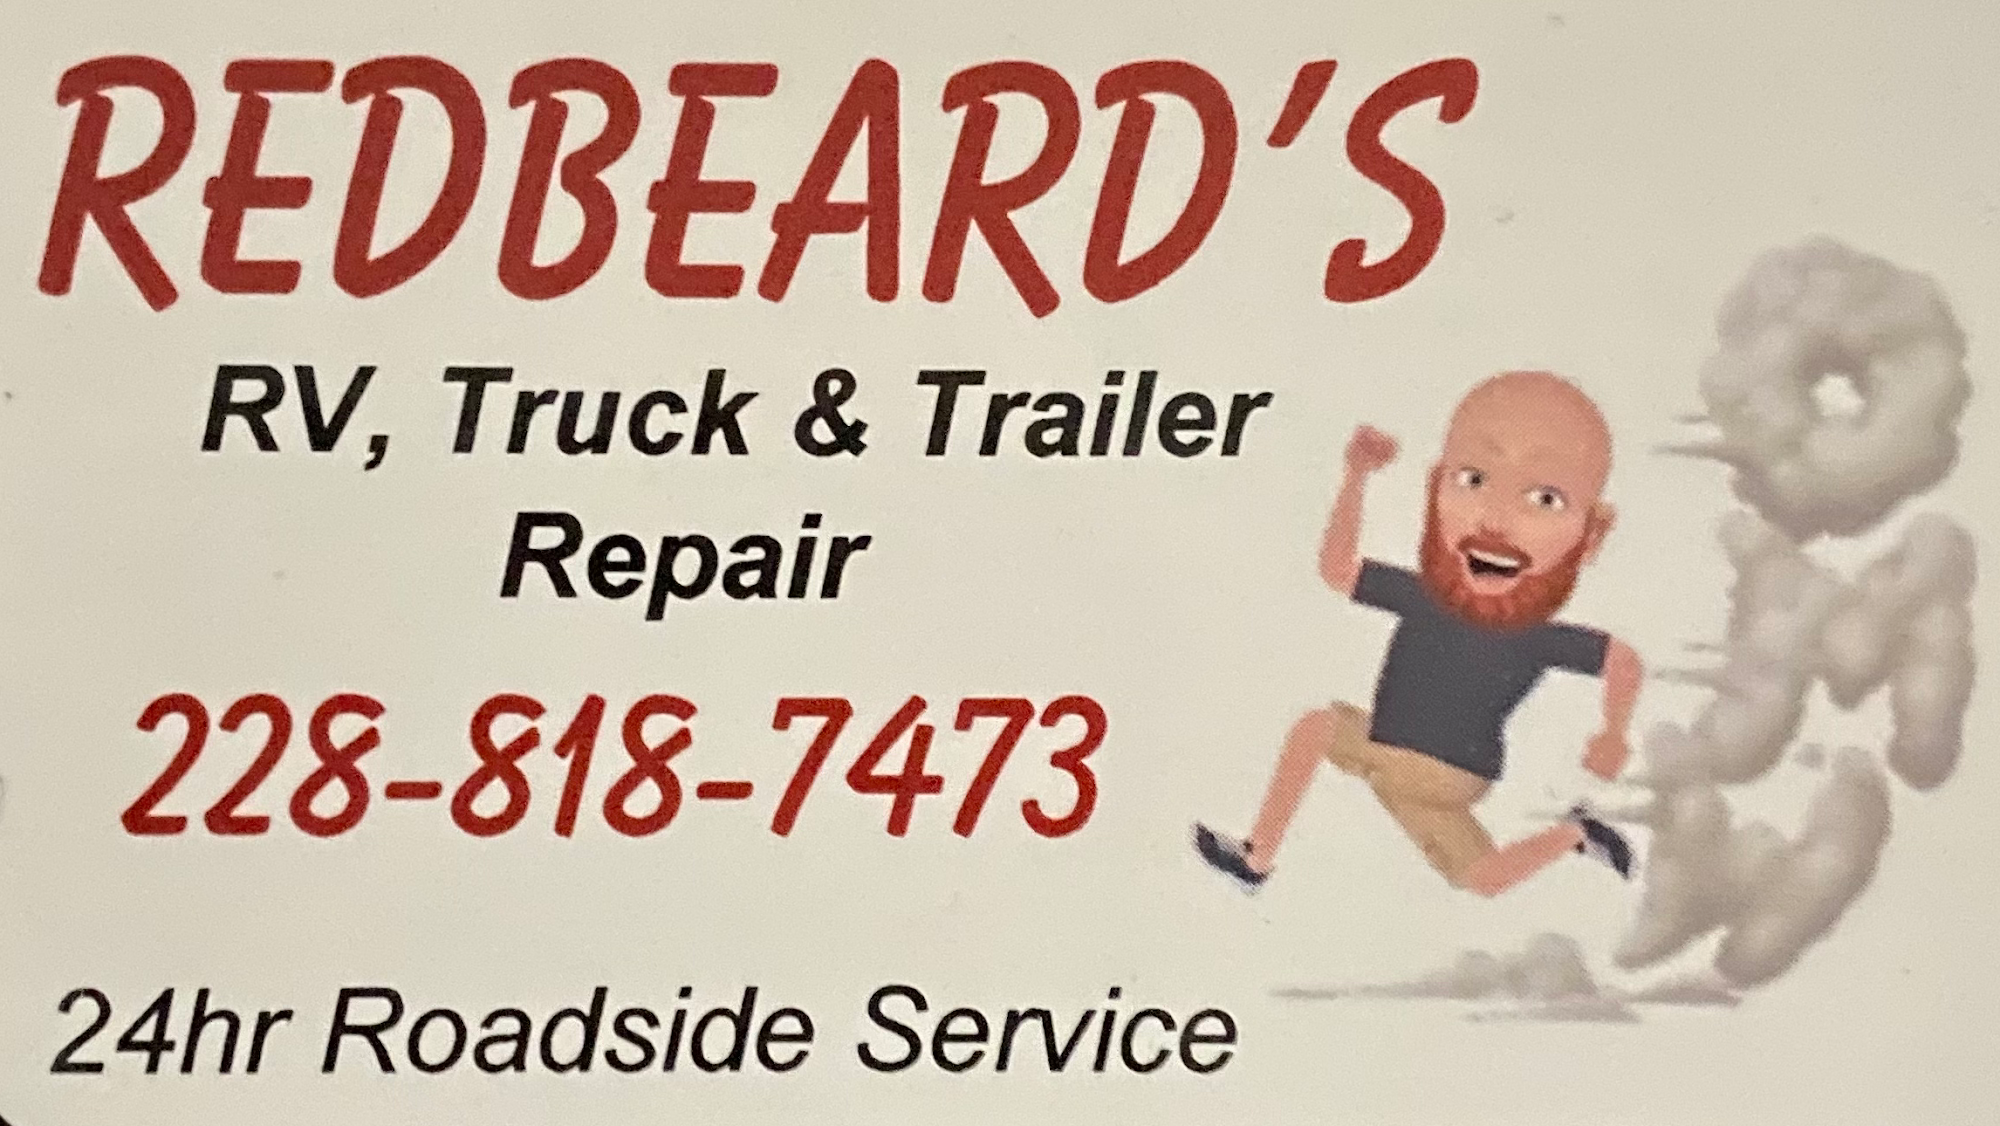 RedBeard’s RV, Truck & Trailer Repair 12400 Joey Lane Central, Vancleave Mississippi 39565